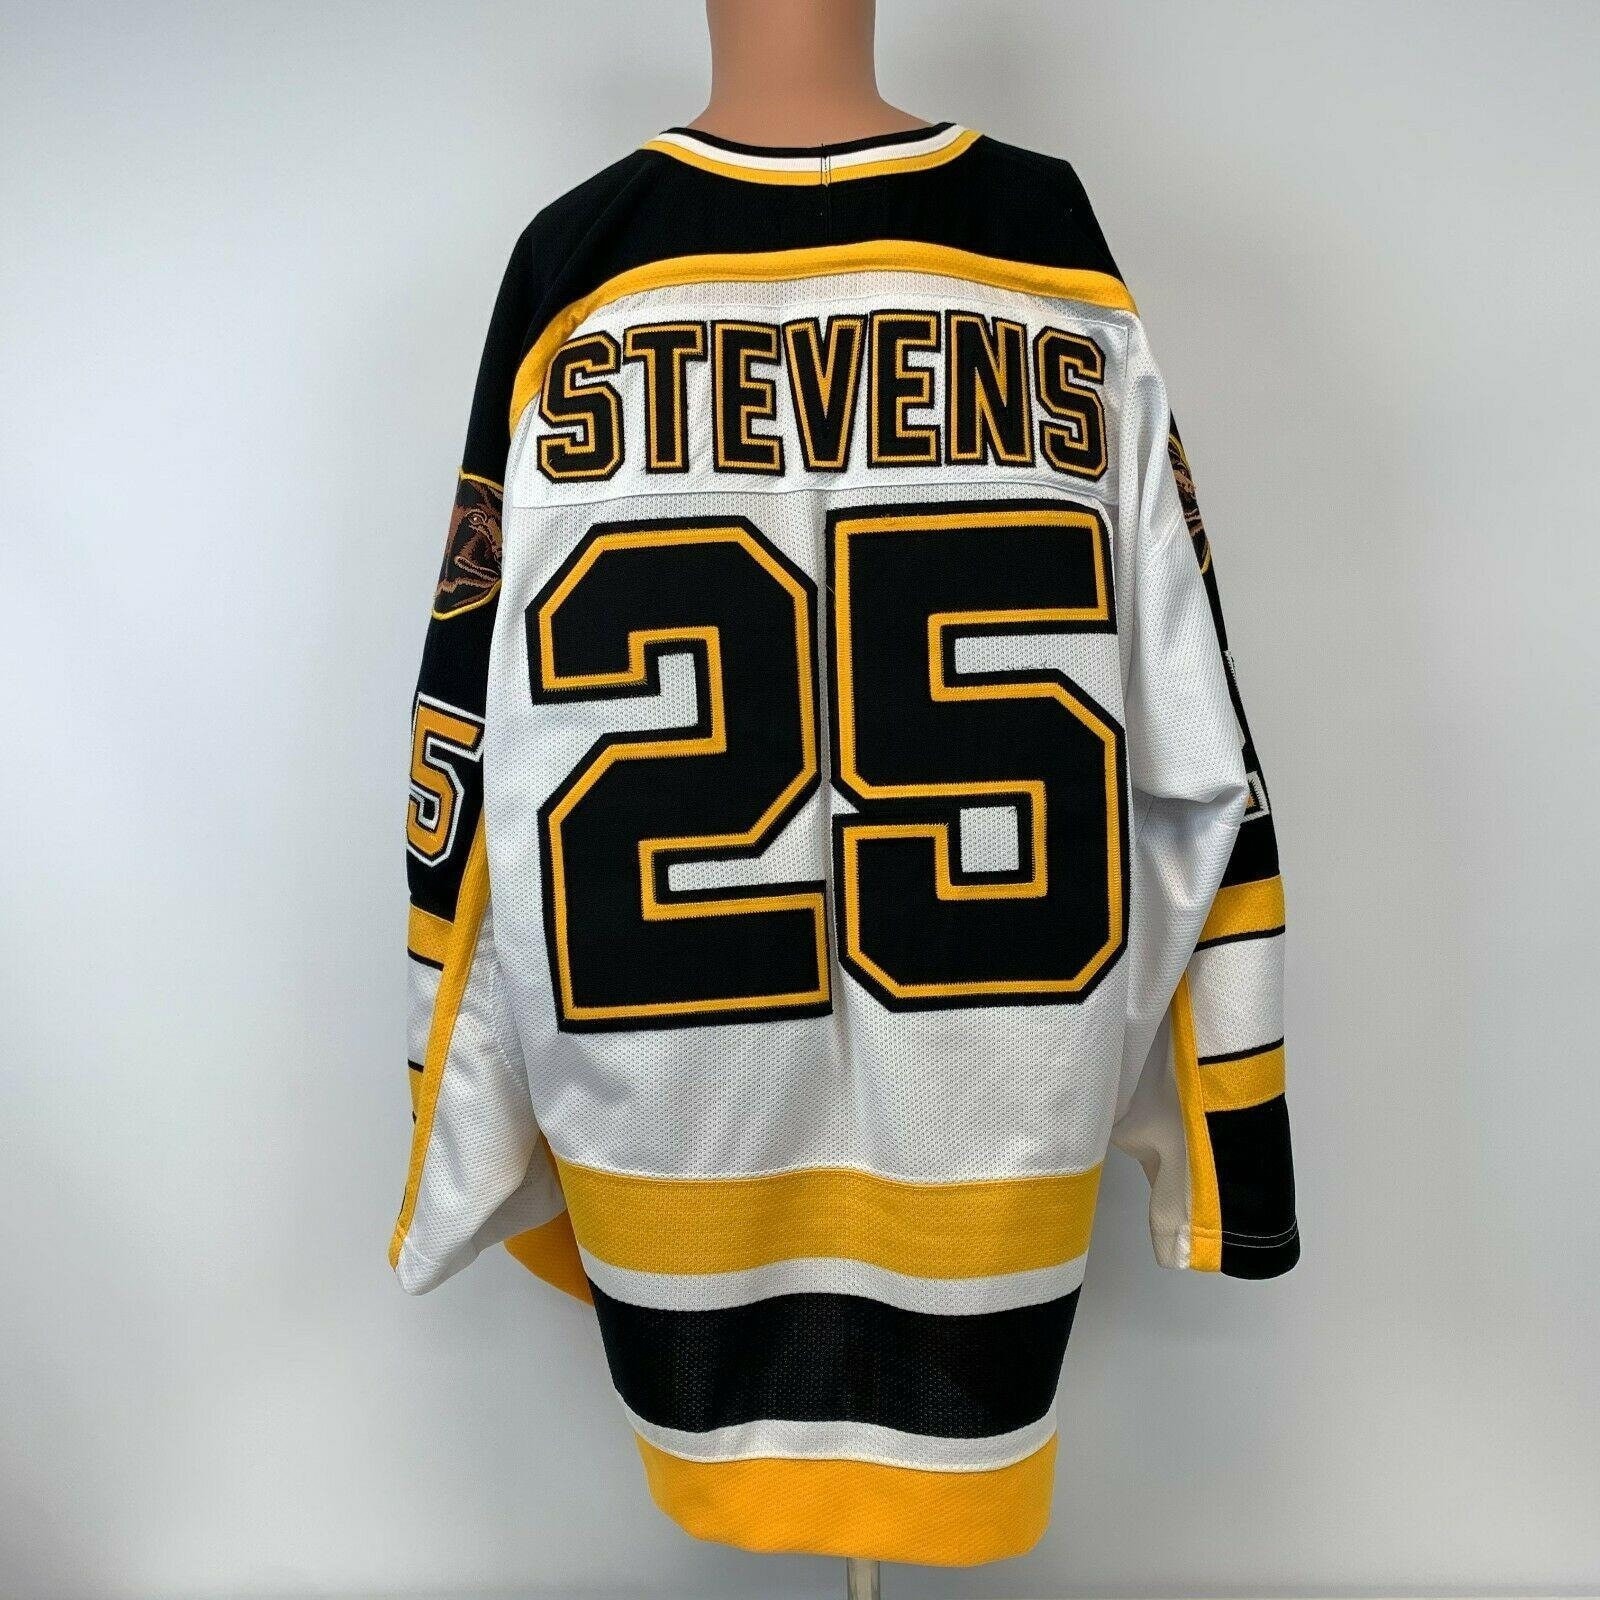 Boston Bruins Authentic Starter 90's Road Hockey Jersey Size Medium